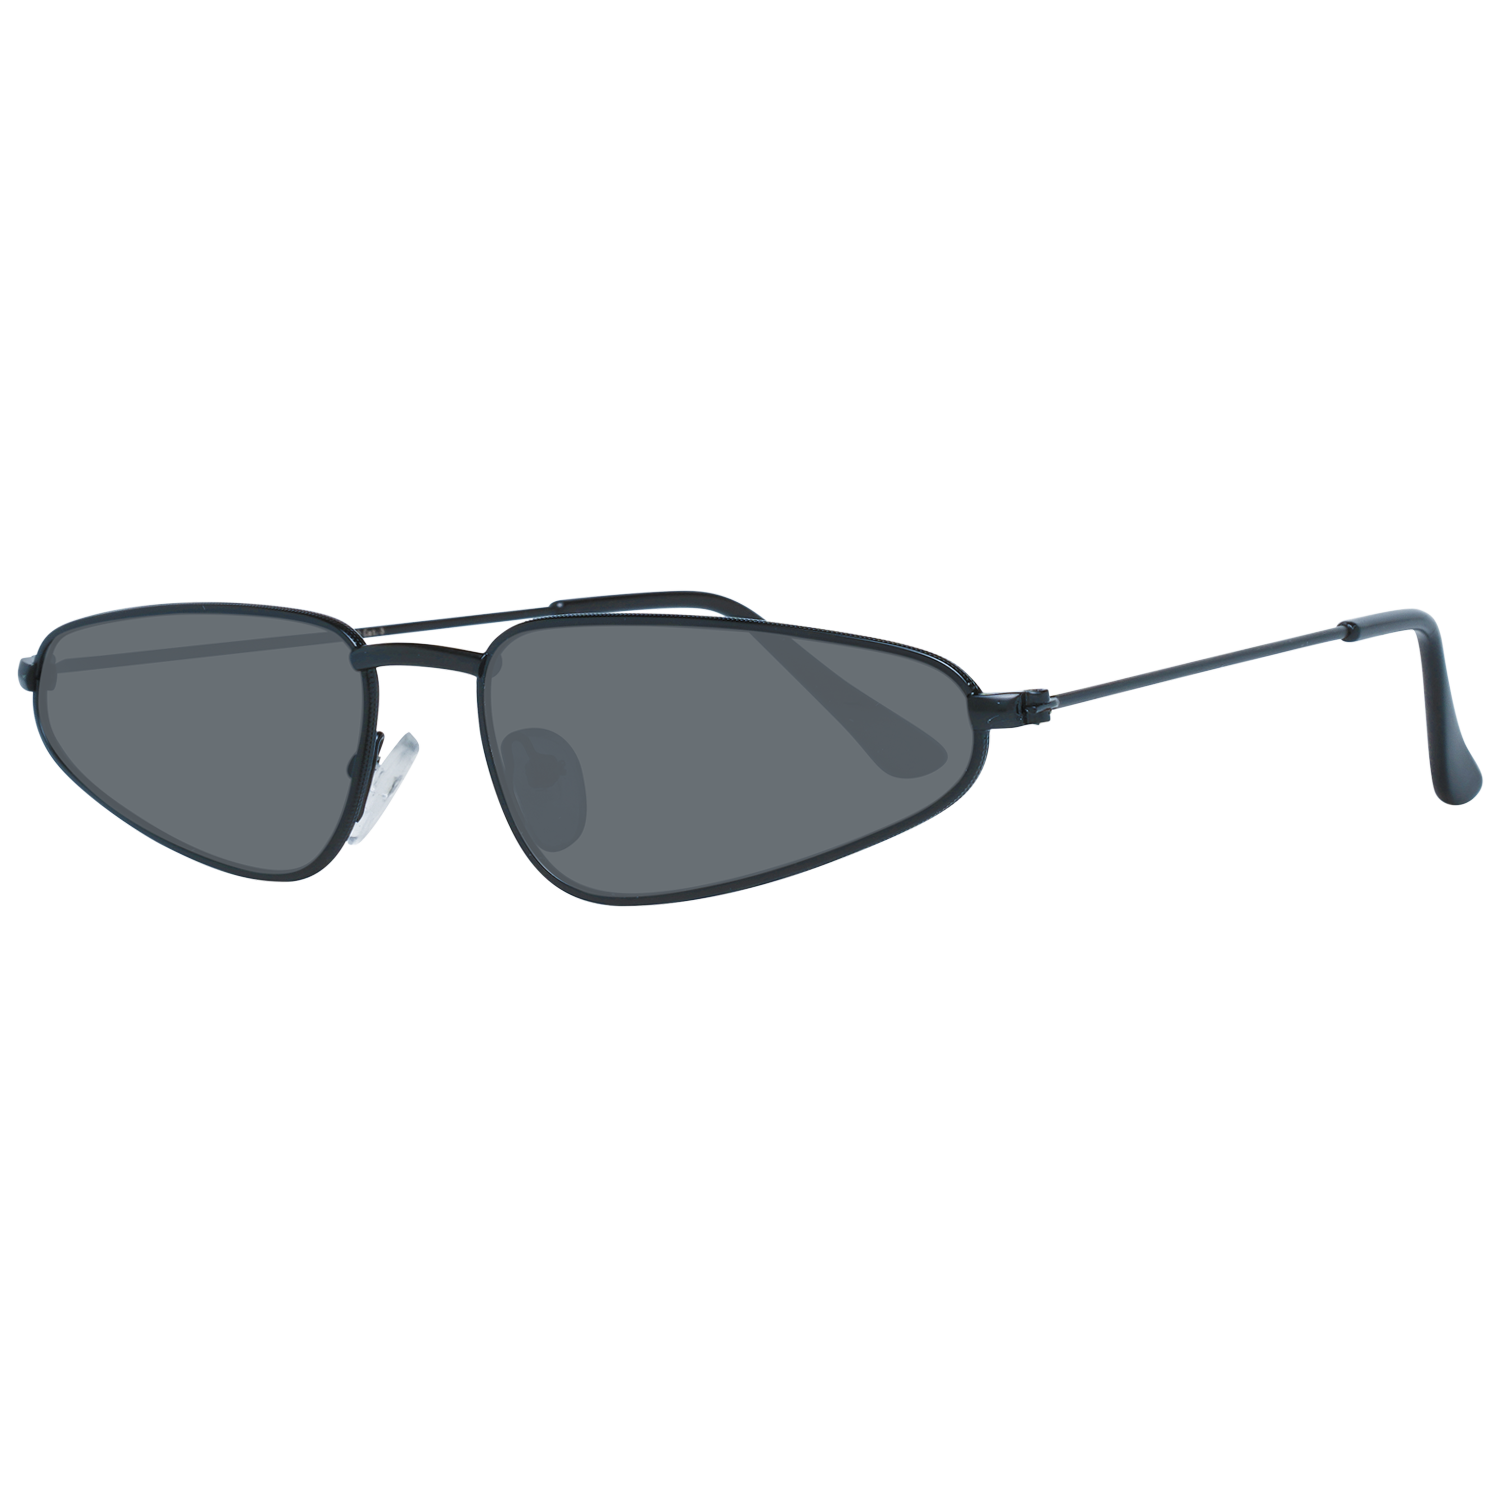 Millner Sunglasses Millner Sunglasses 0021101 Gatwick Eyeglasses Eyewear UK USA Australia 